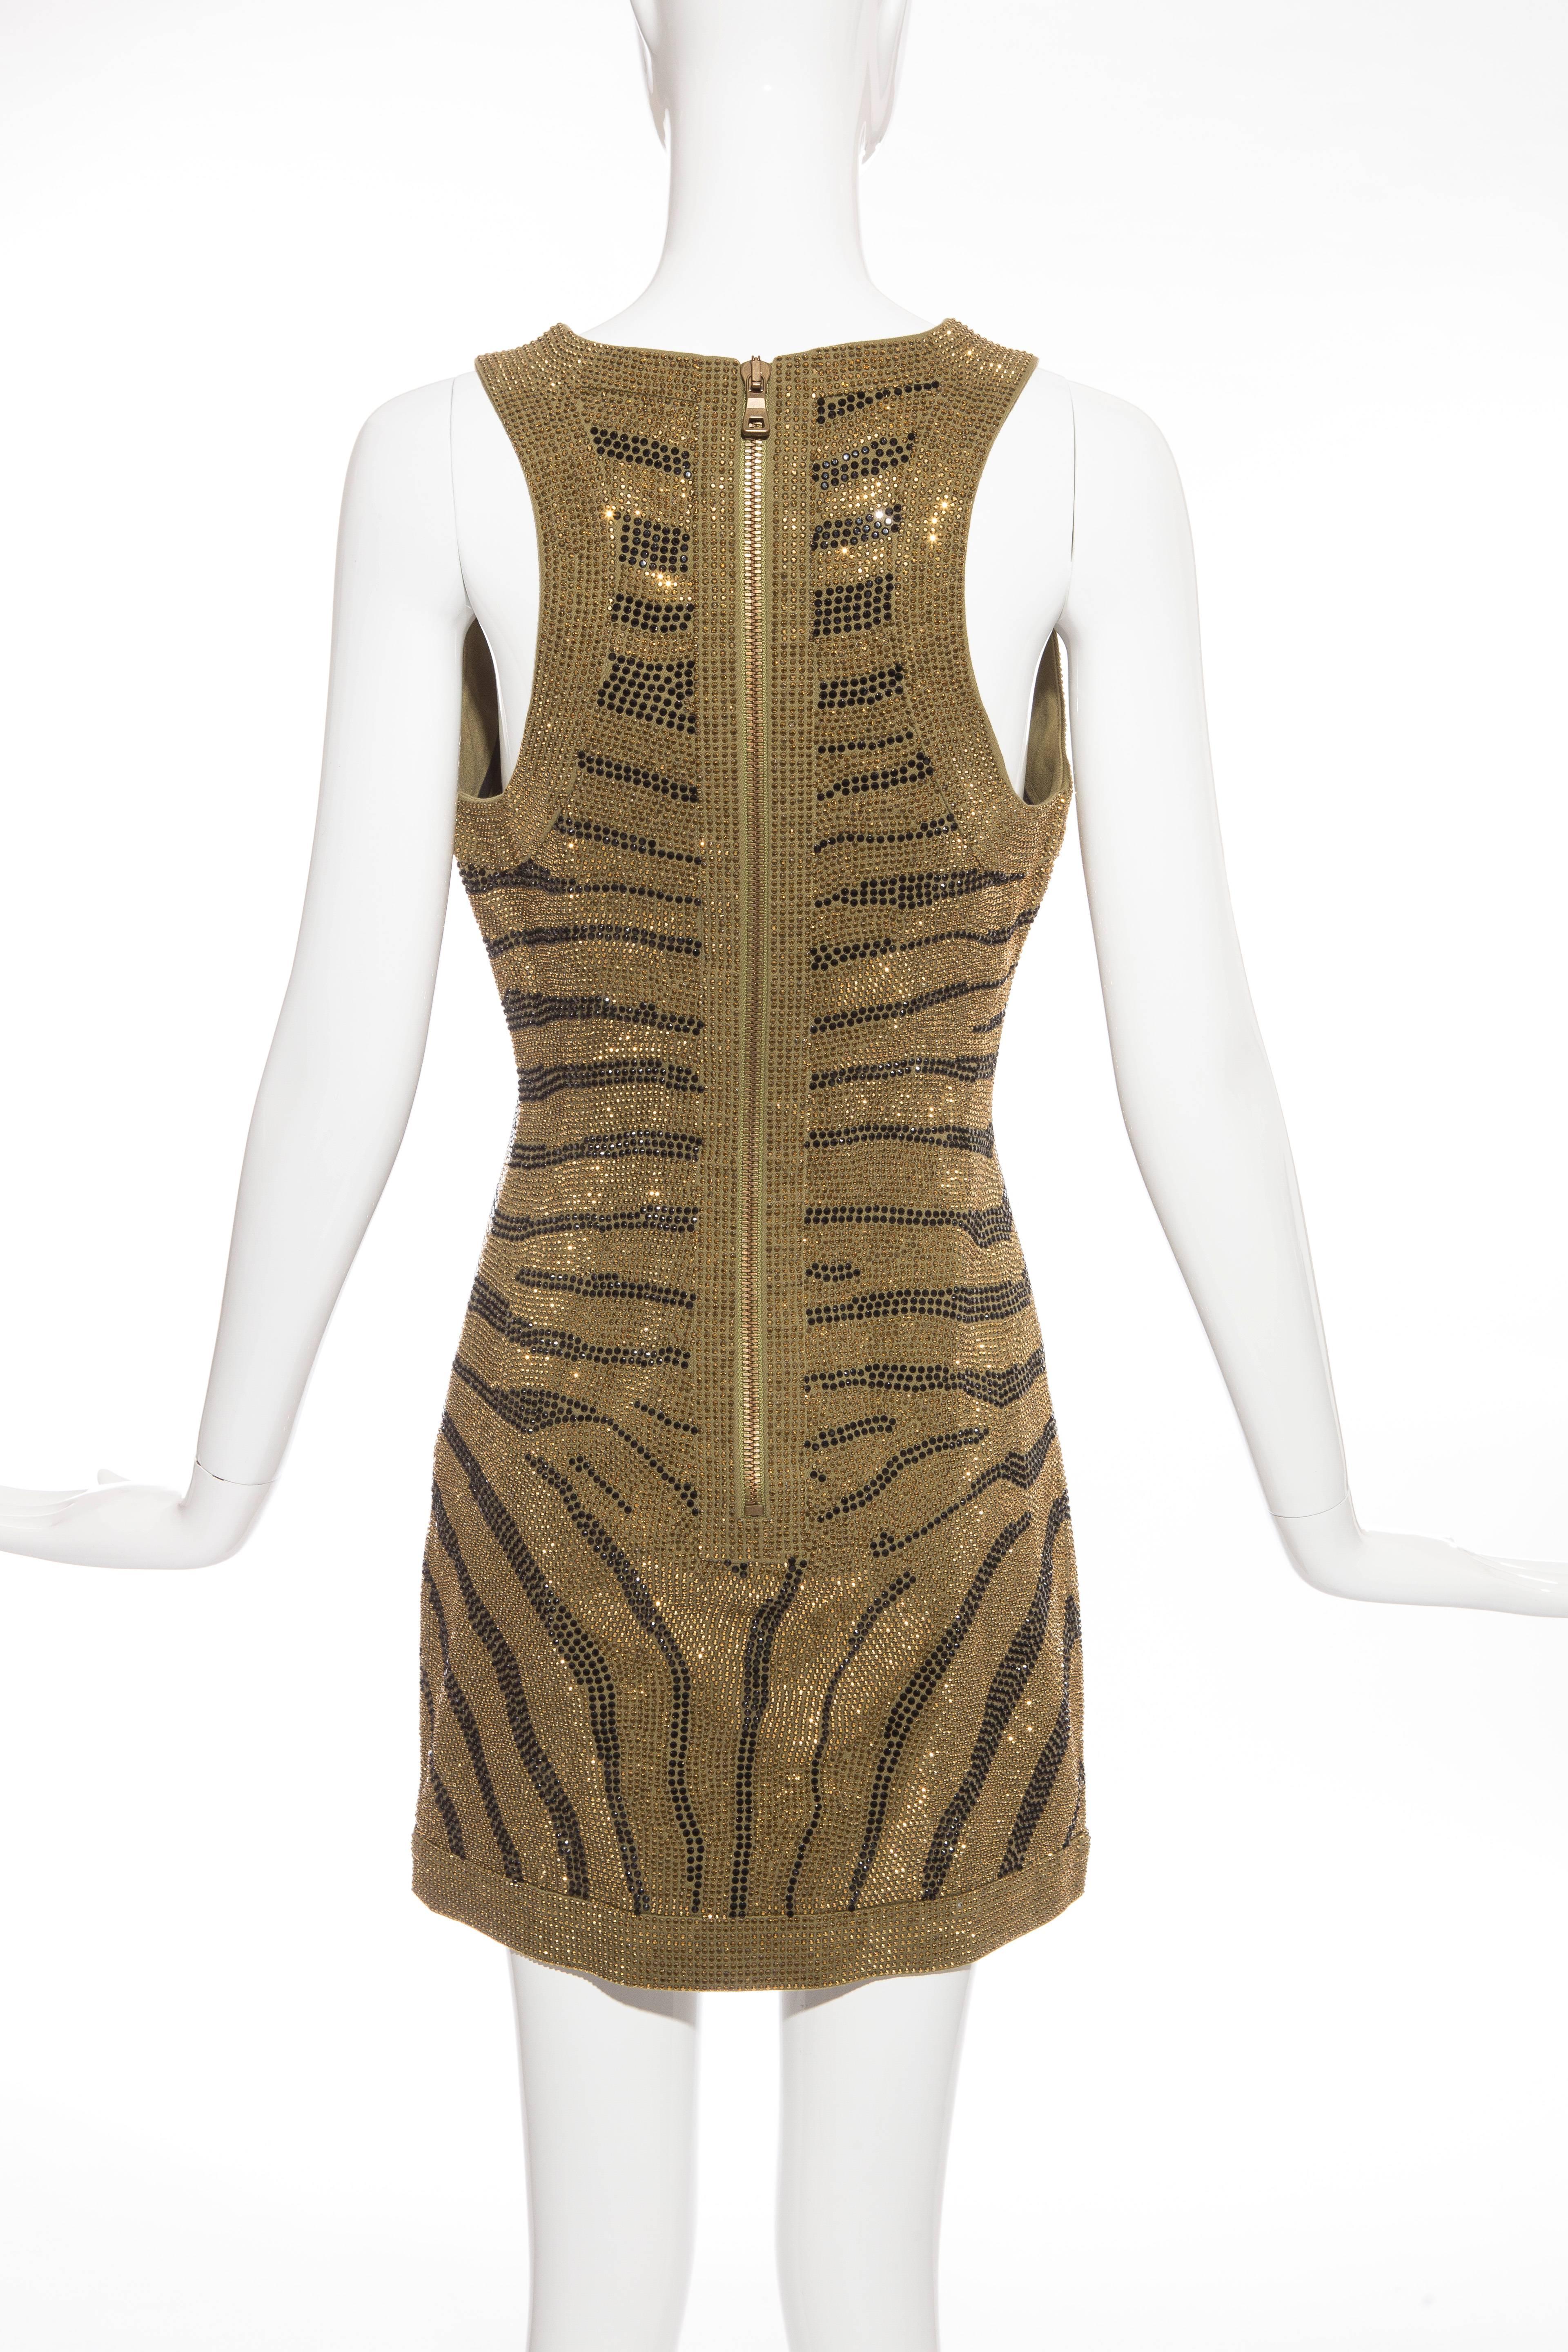 balmain zebra dress